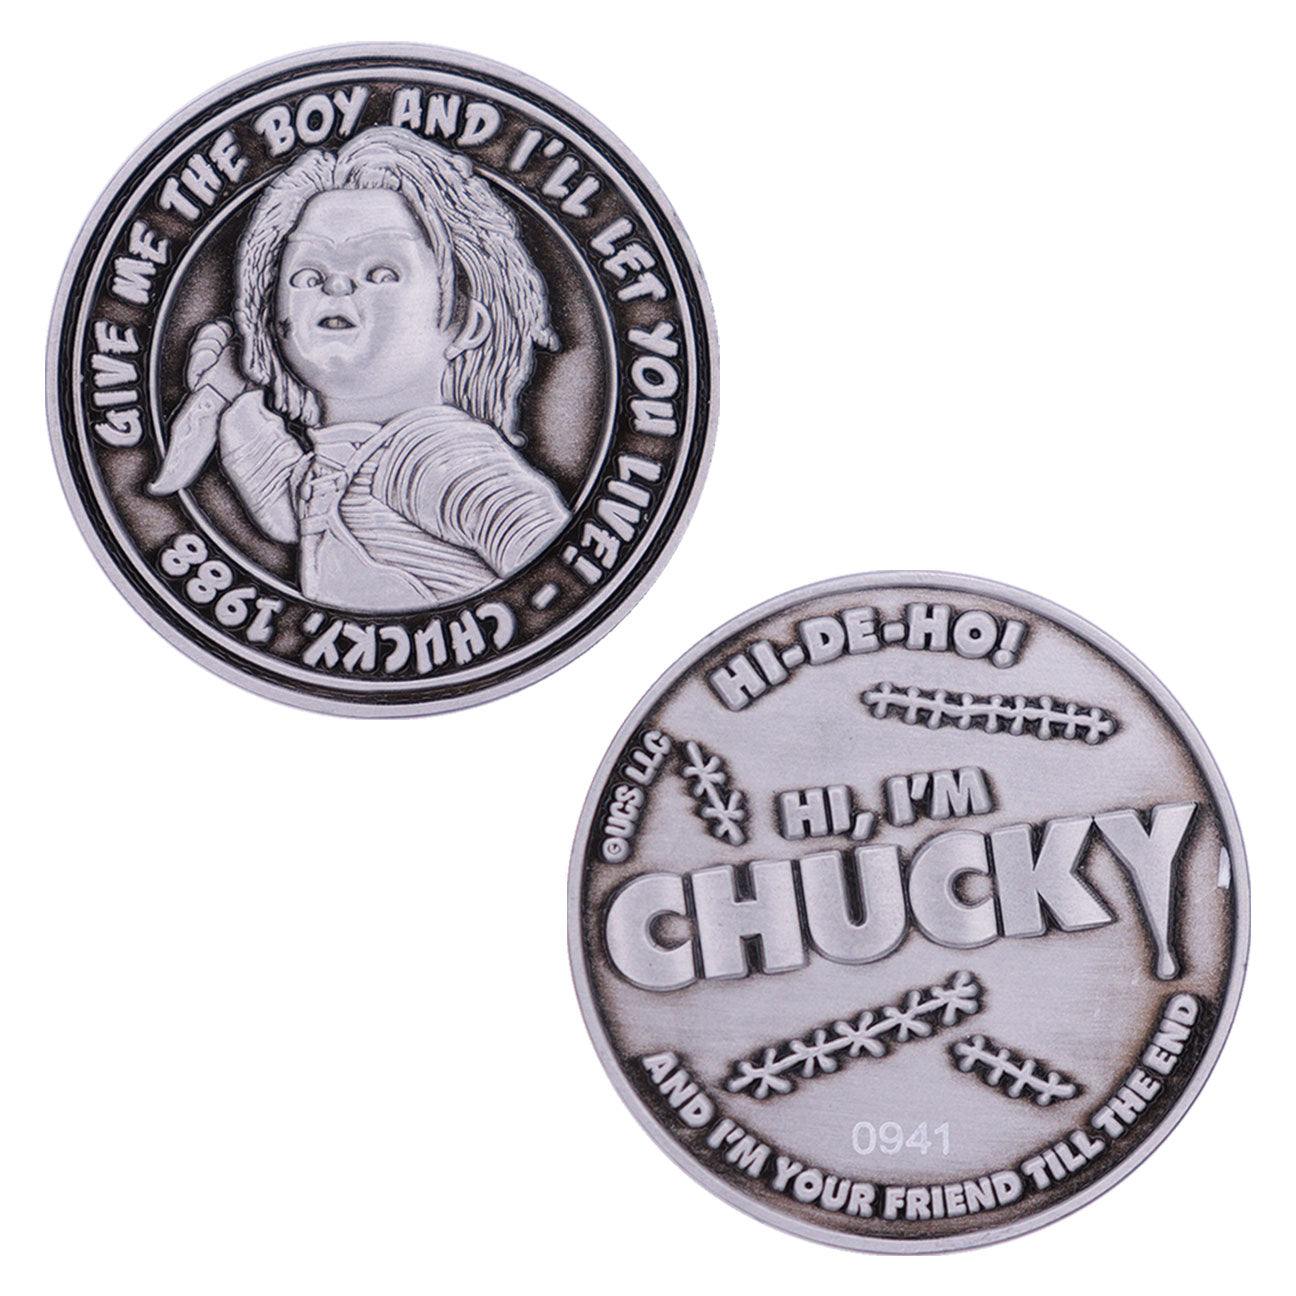 Chucky Limited Edition Collectible Coin